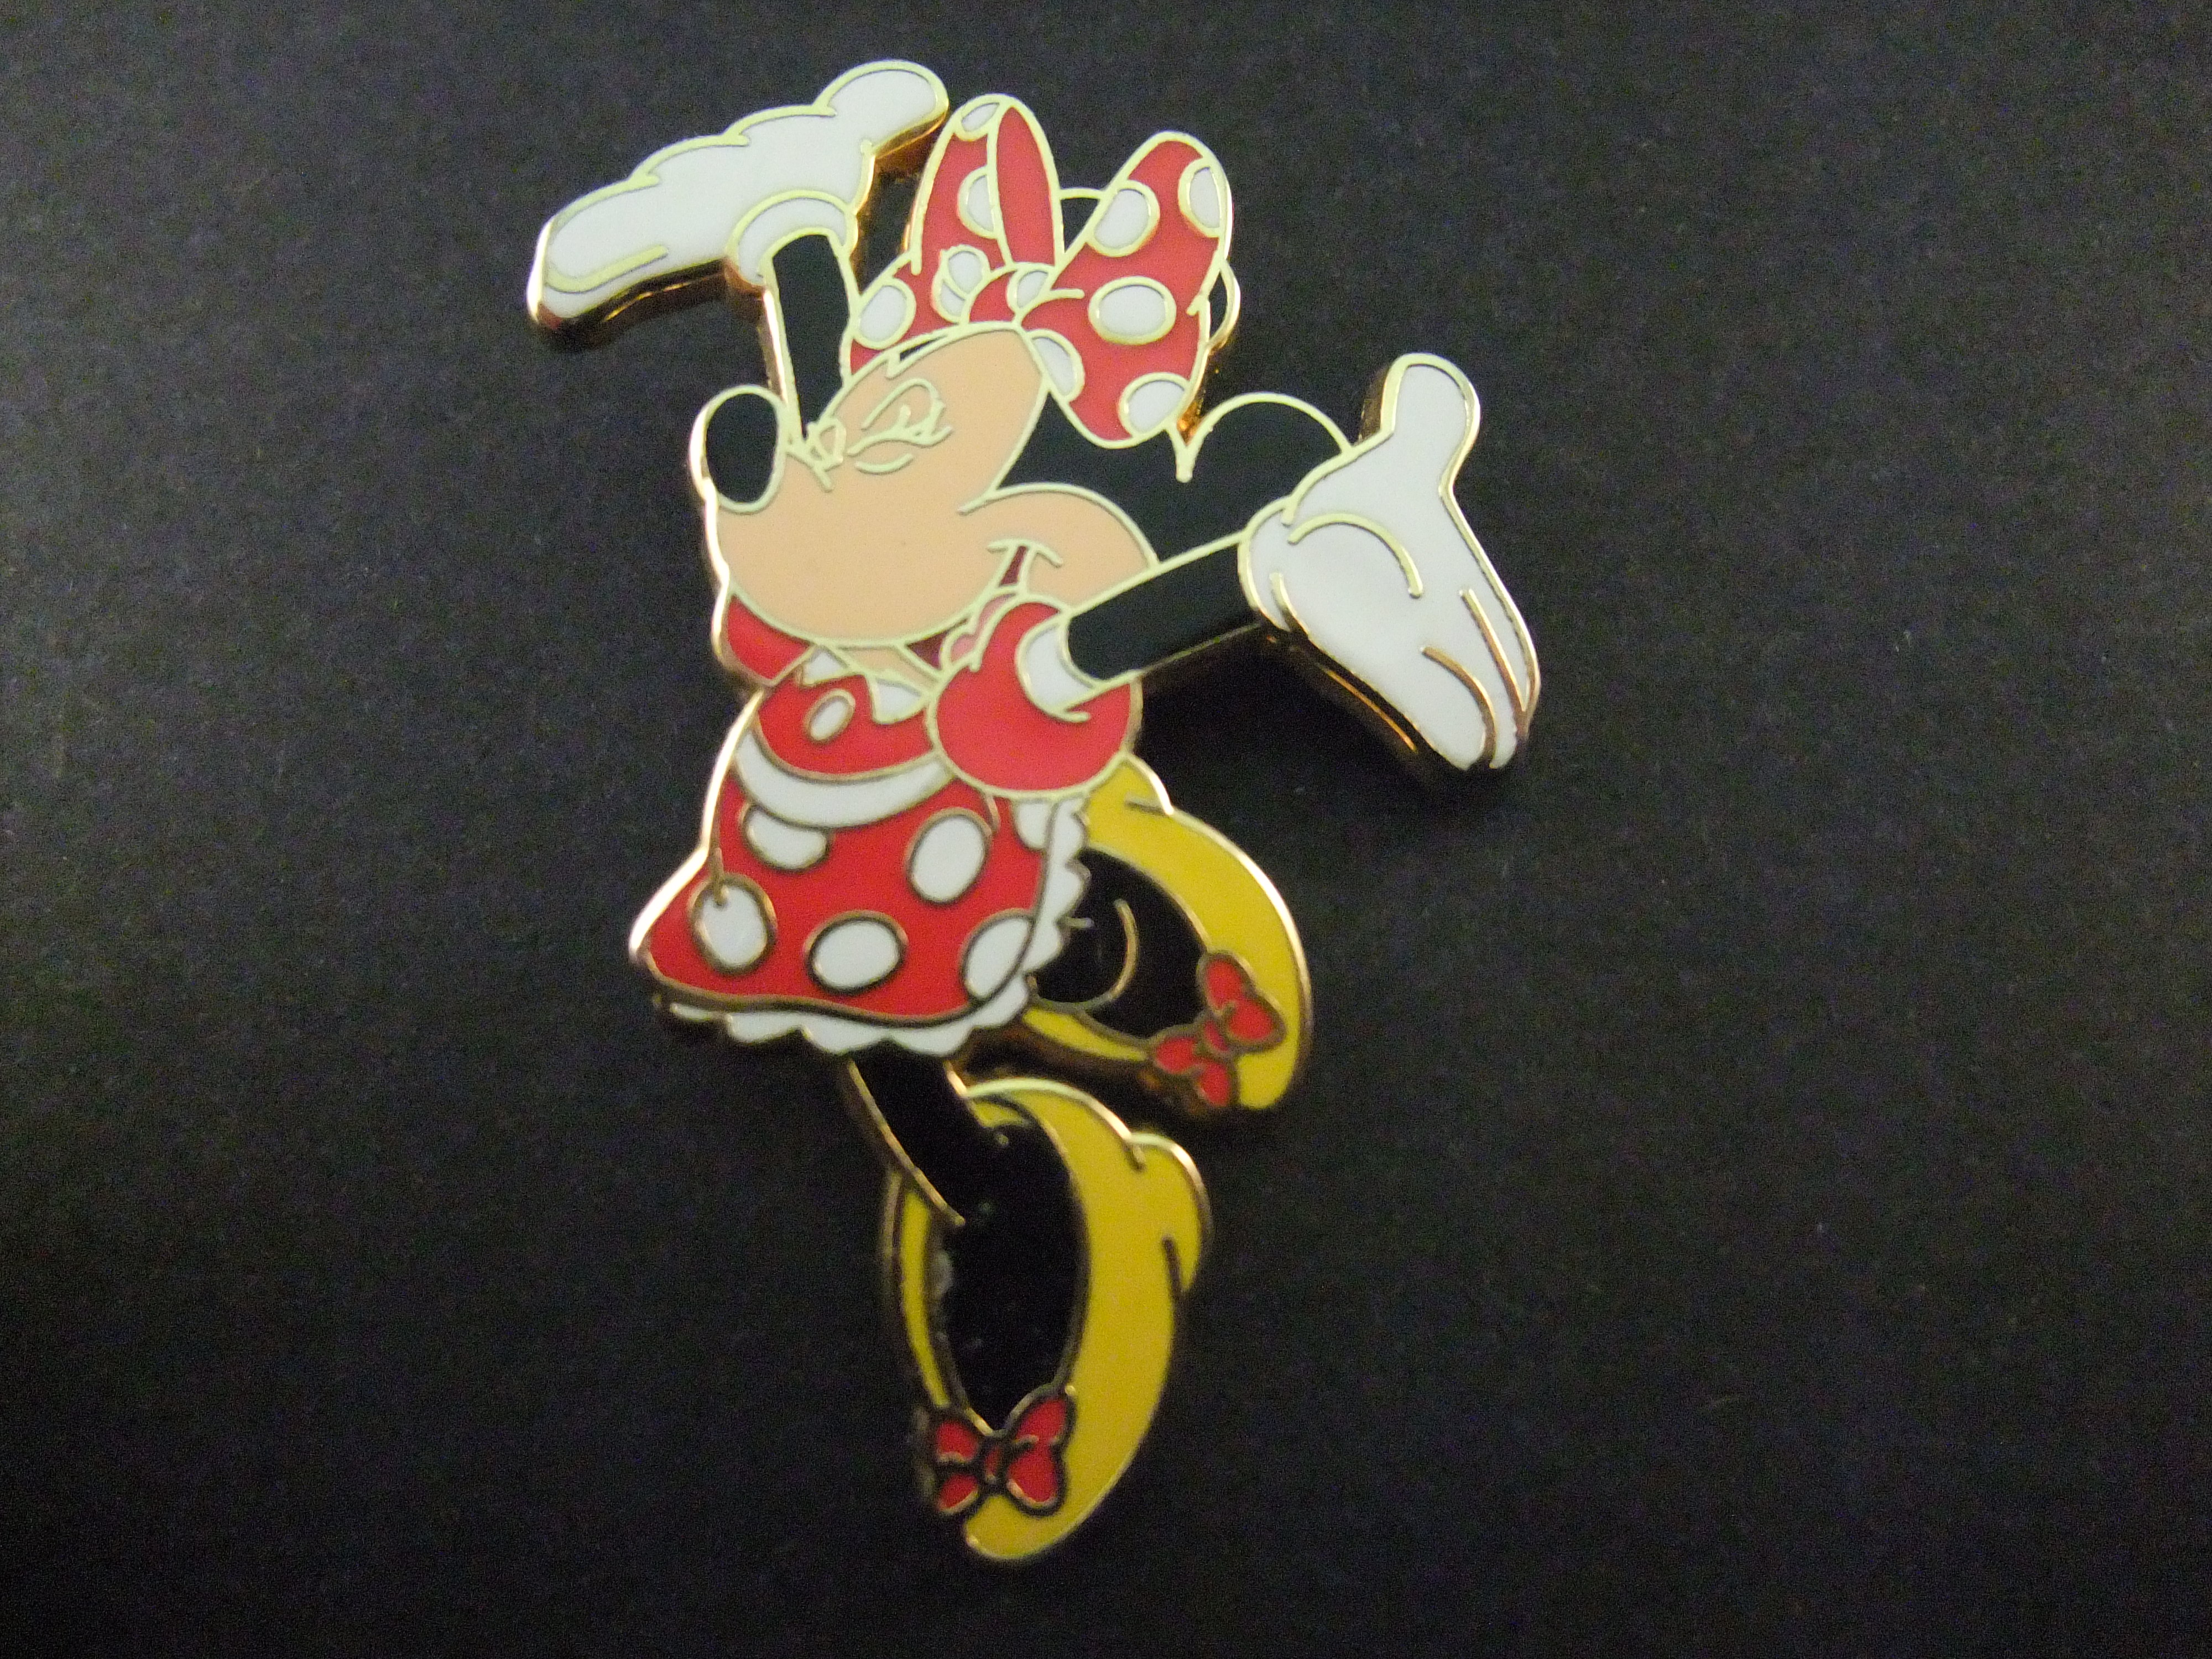 Minnie Mouse Disney vriendin van Mickey Mouse, is blij